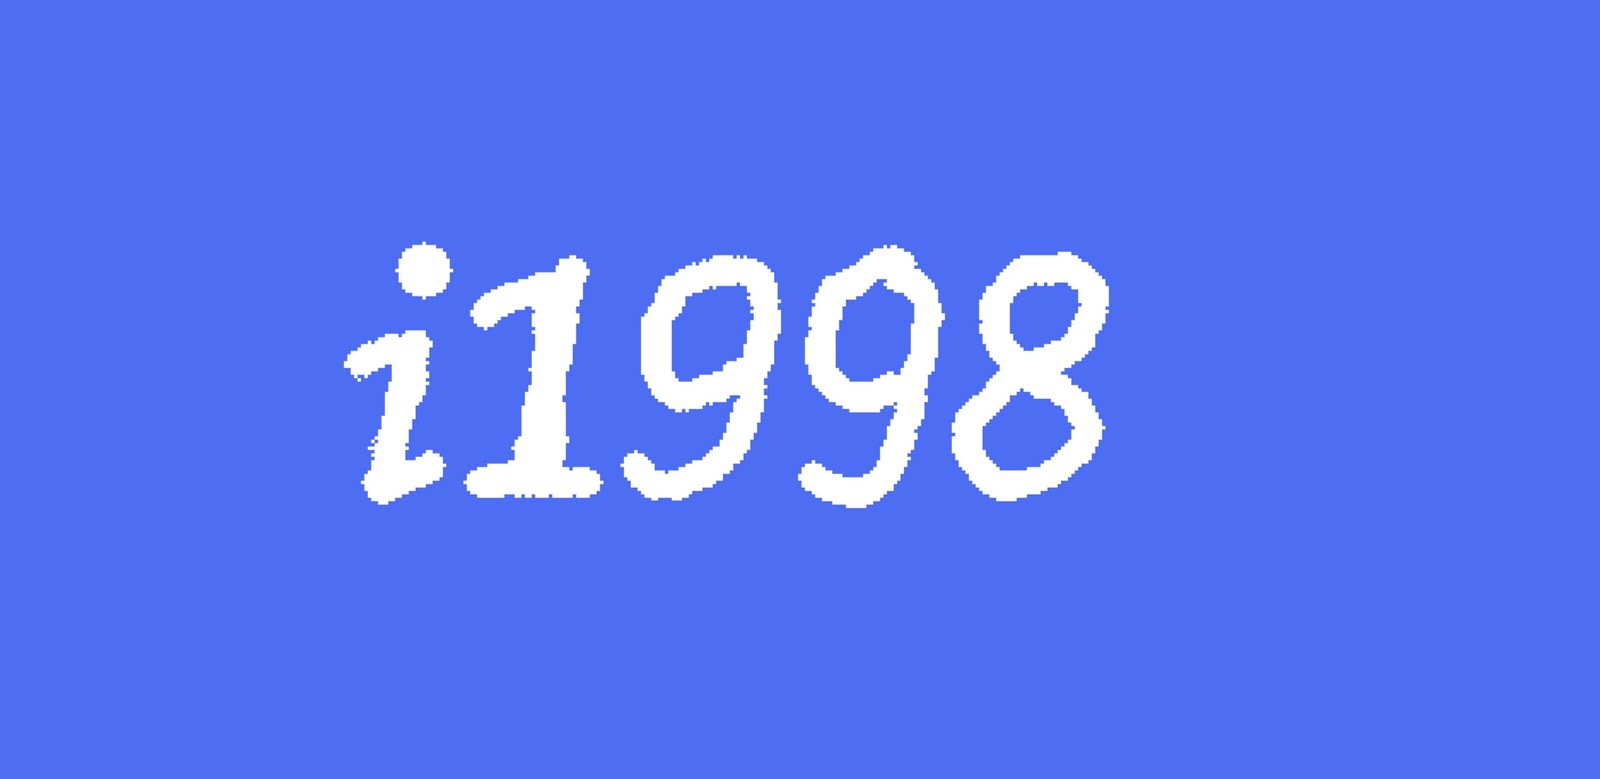 i1998